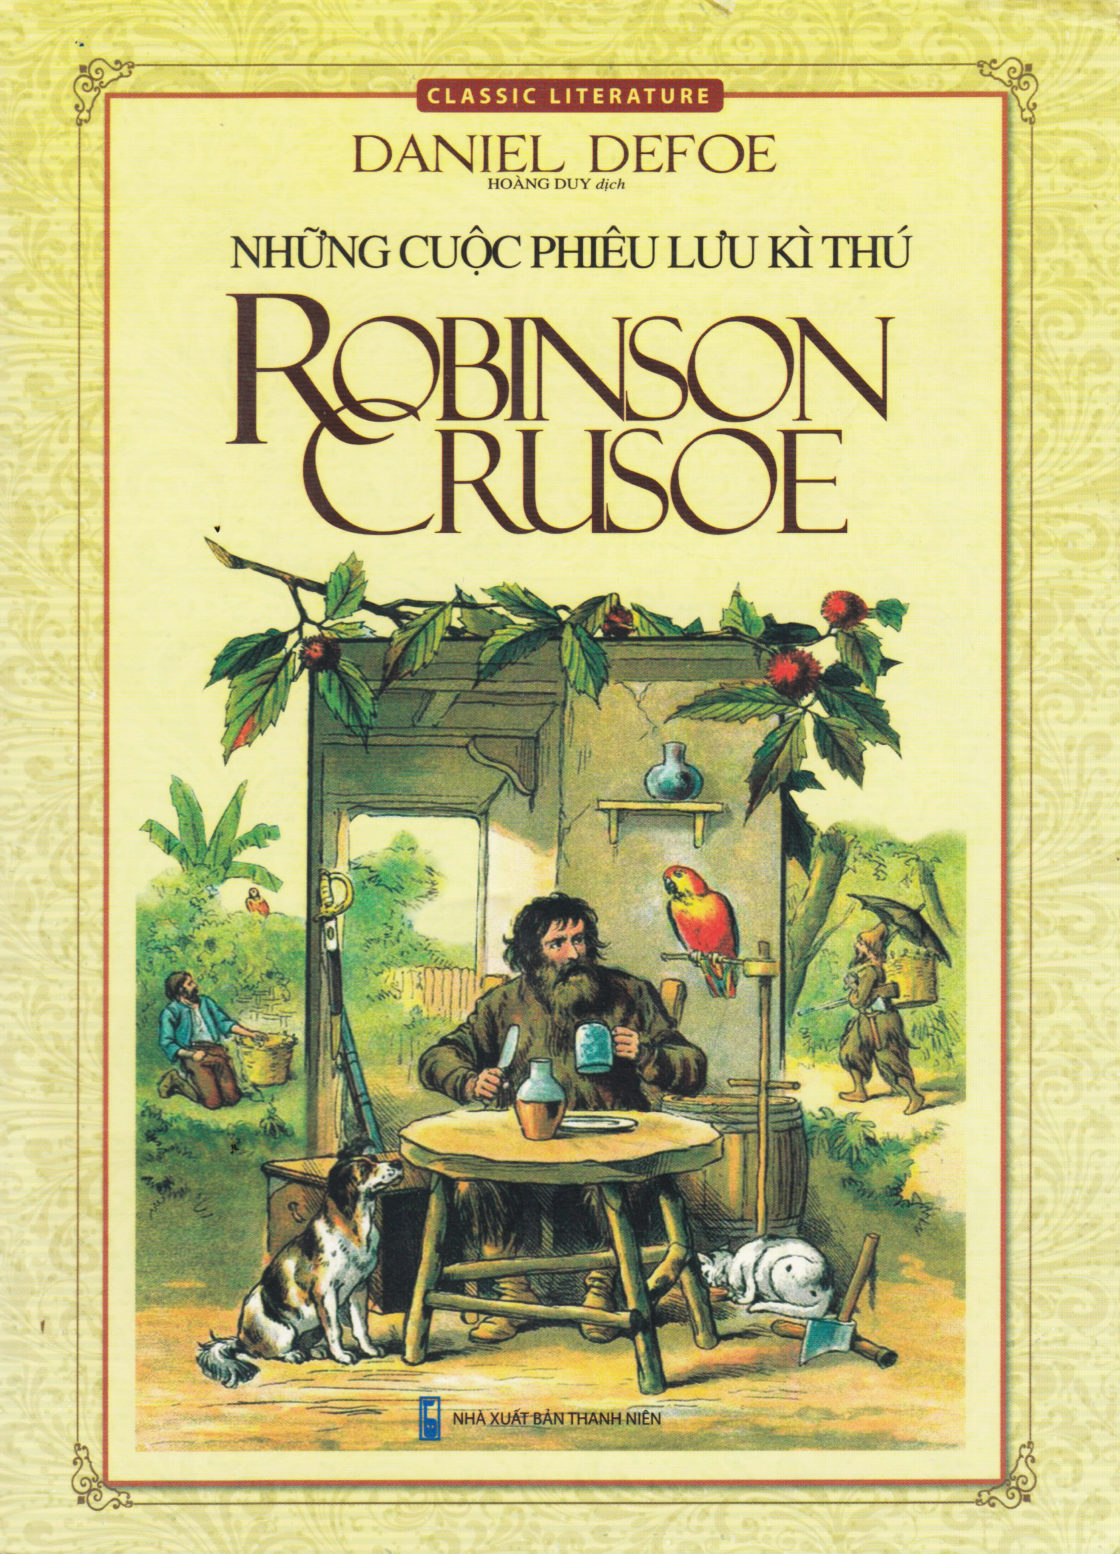 Robinson Crusoe (Vietnamese)